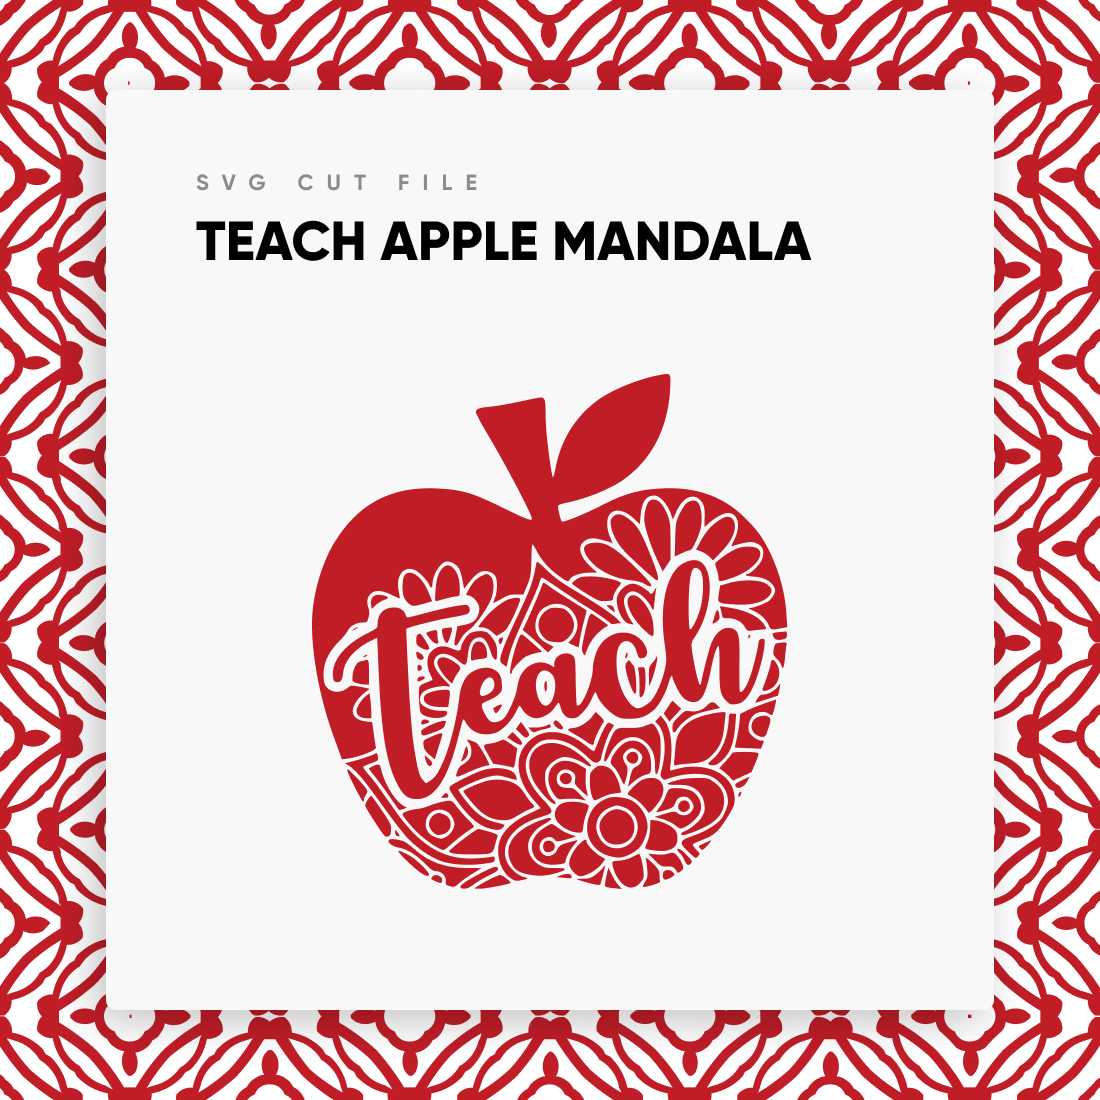 Teach Red Apple Mandala SVG Cut File.